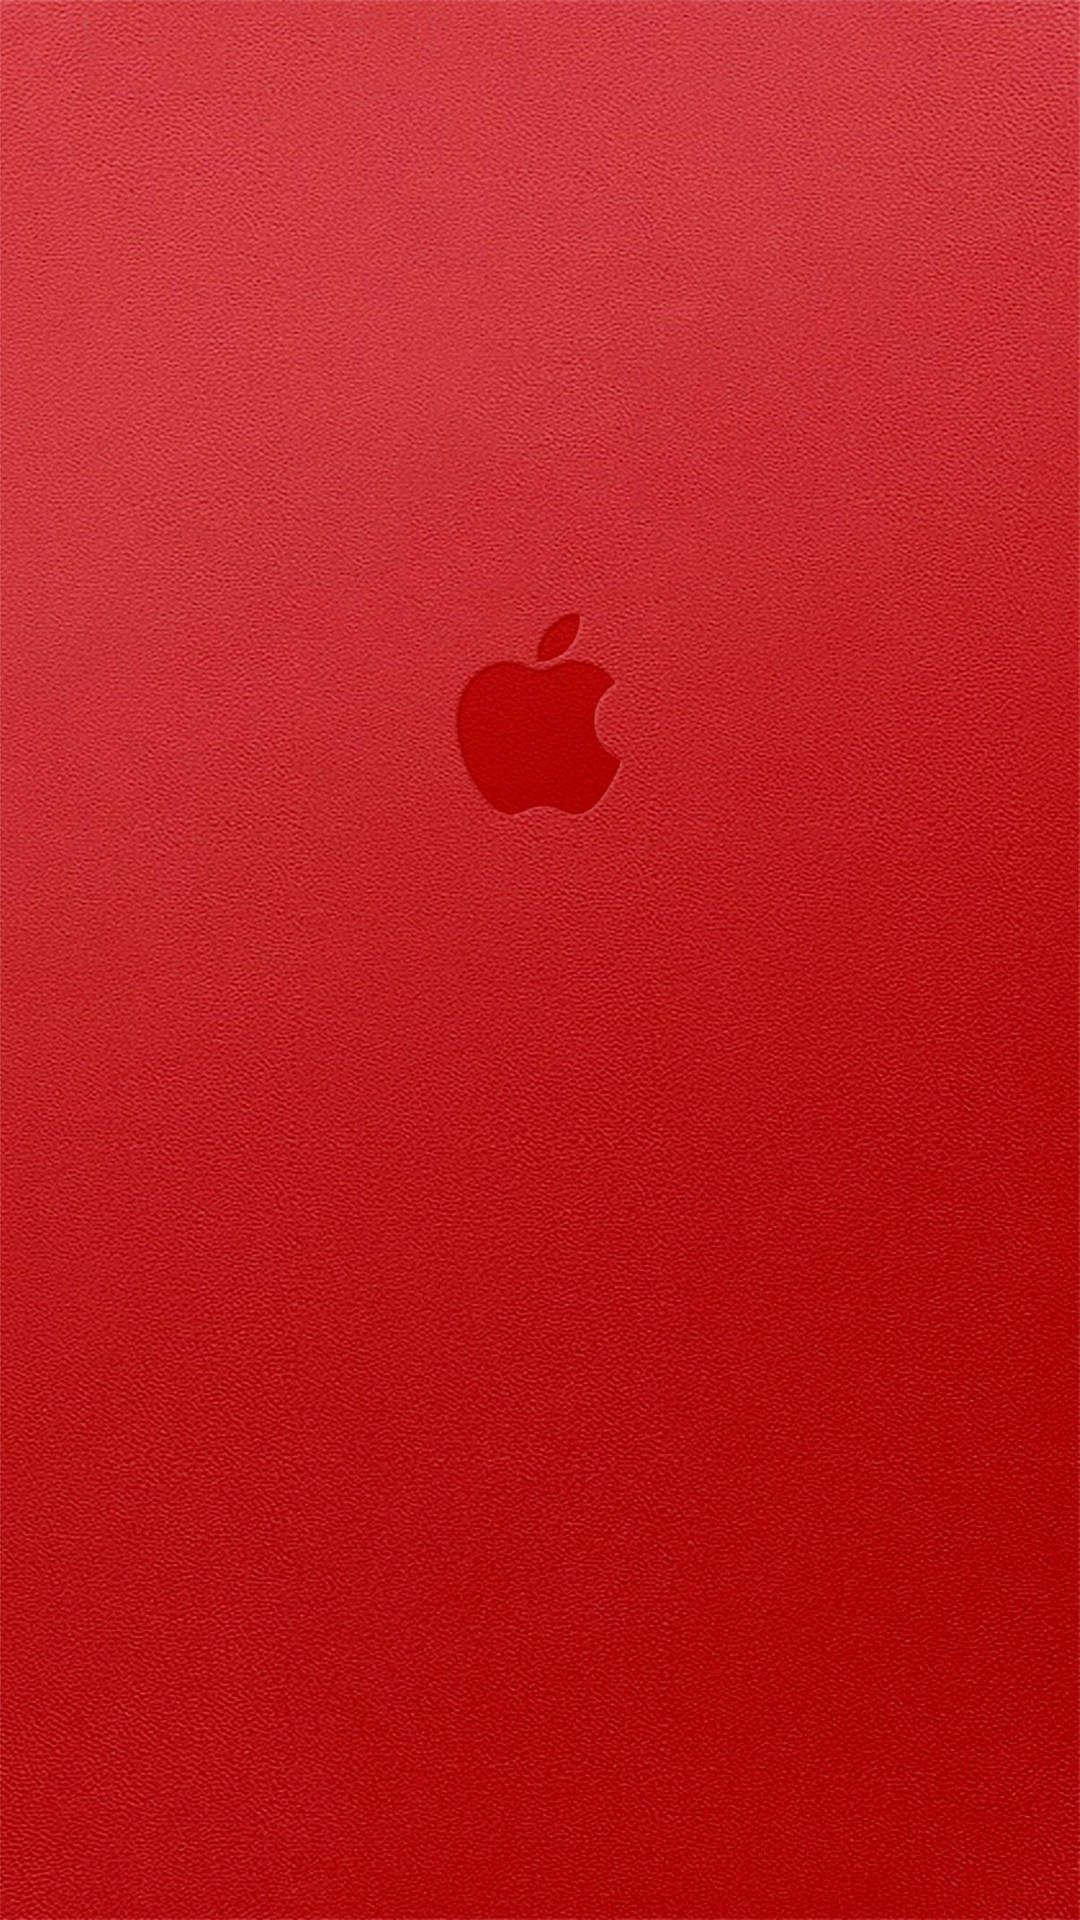 Iphone X Logo Apple Originale Su Rosso Sfondo